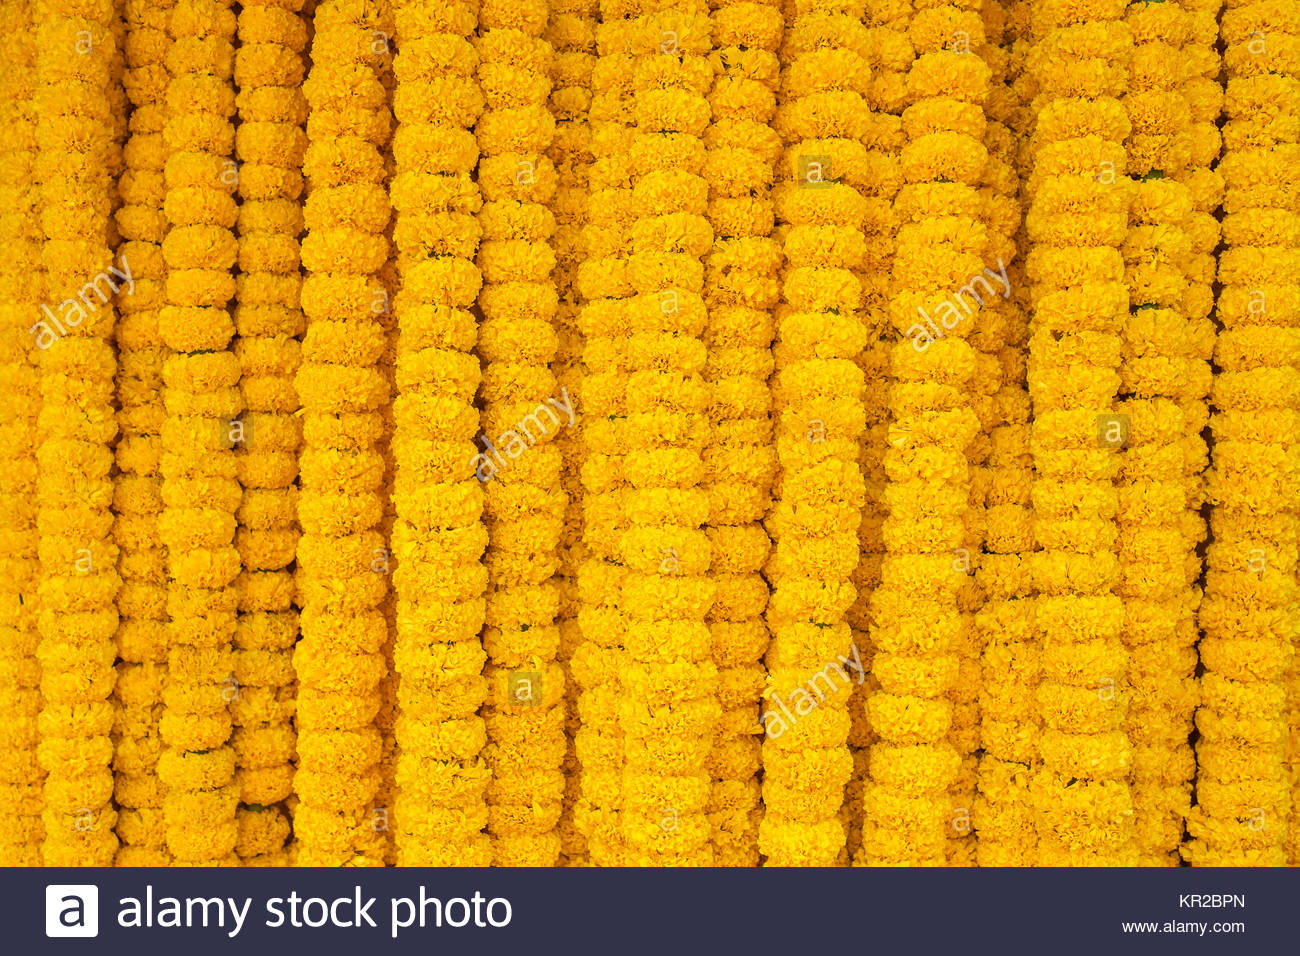 Yellow Marigold Flowers Garland Background Stock Photo